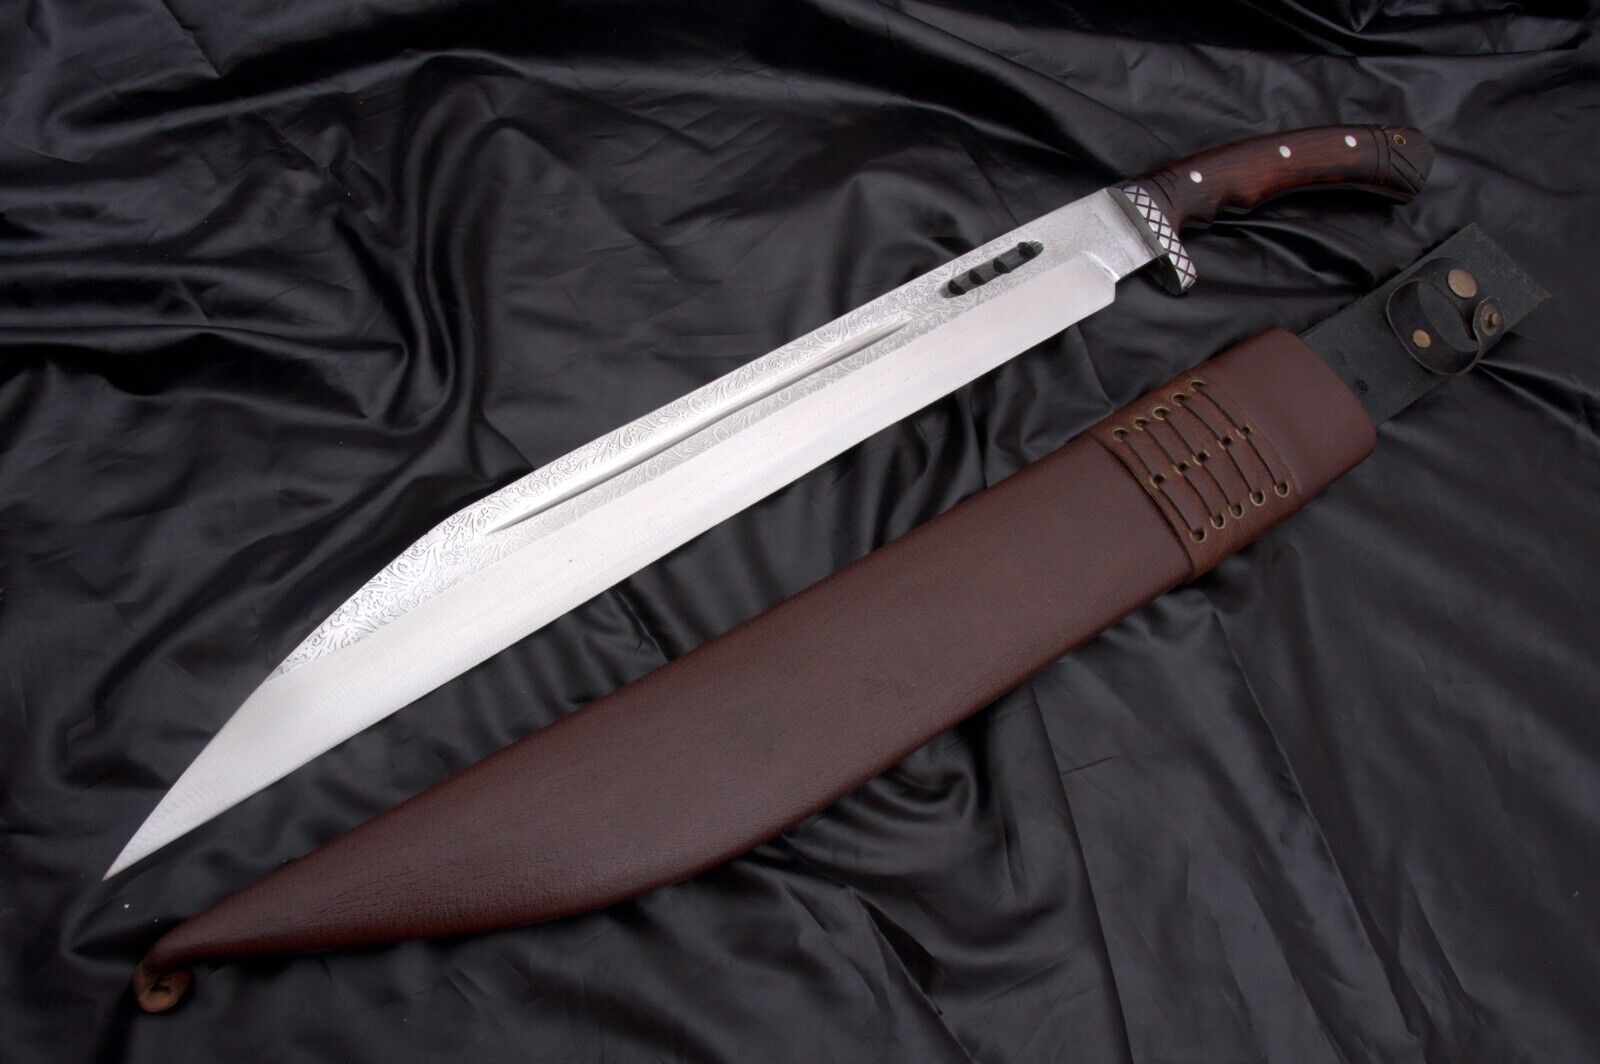 Seax sword-18 inches Hunting seax knife-tactical,combat,viking,survival machete